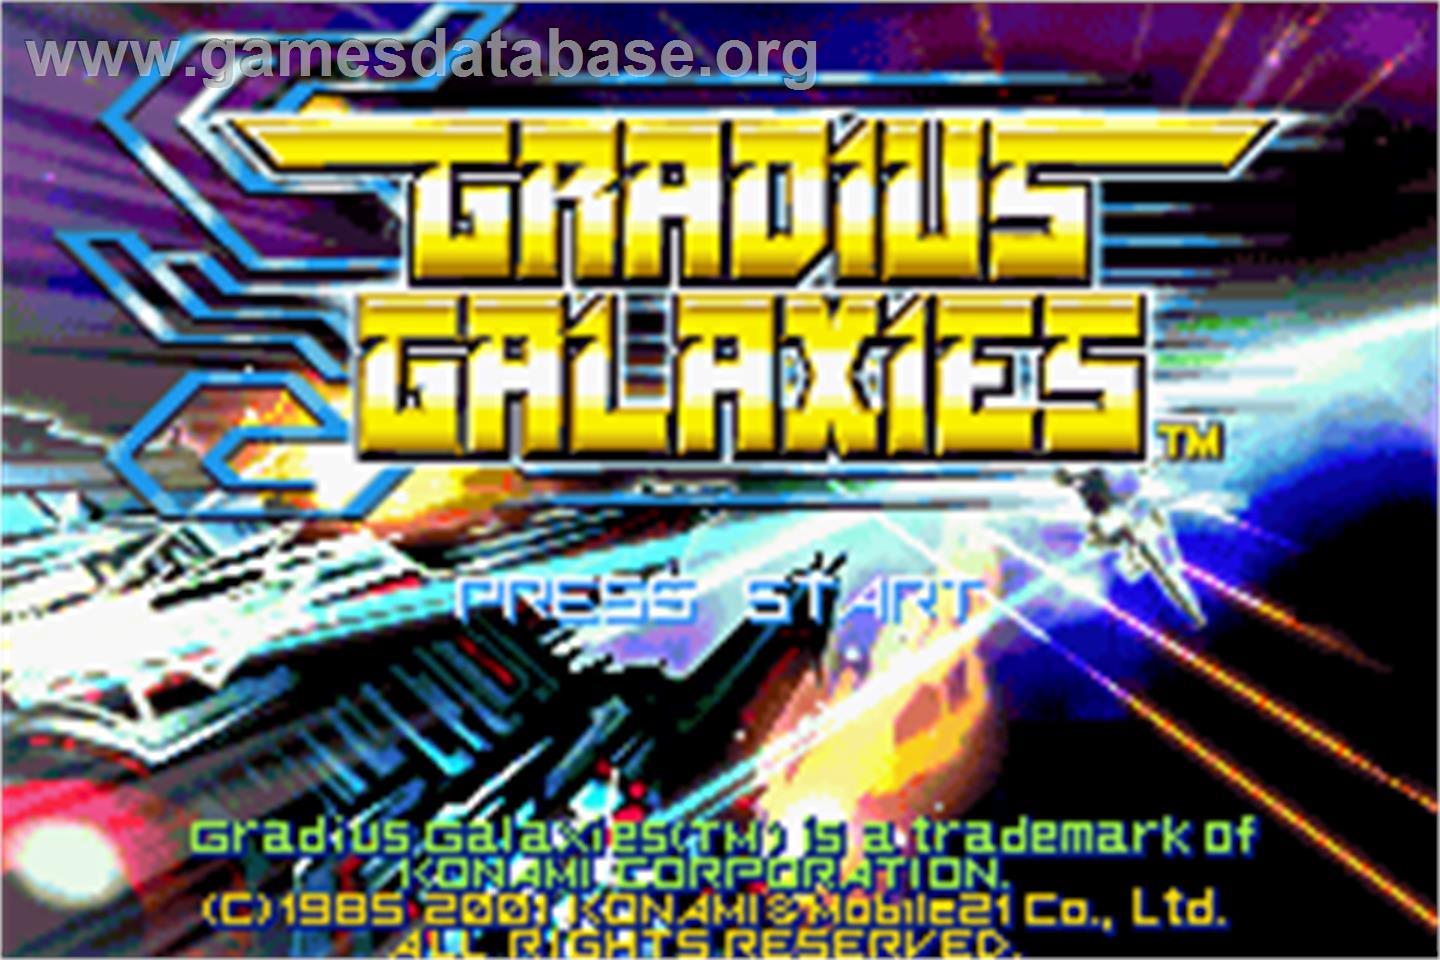 Gradius Galaxies - Nintendo Game Boy Advance - Artwork - Title Screen